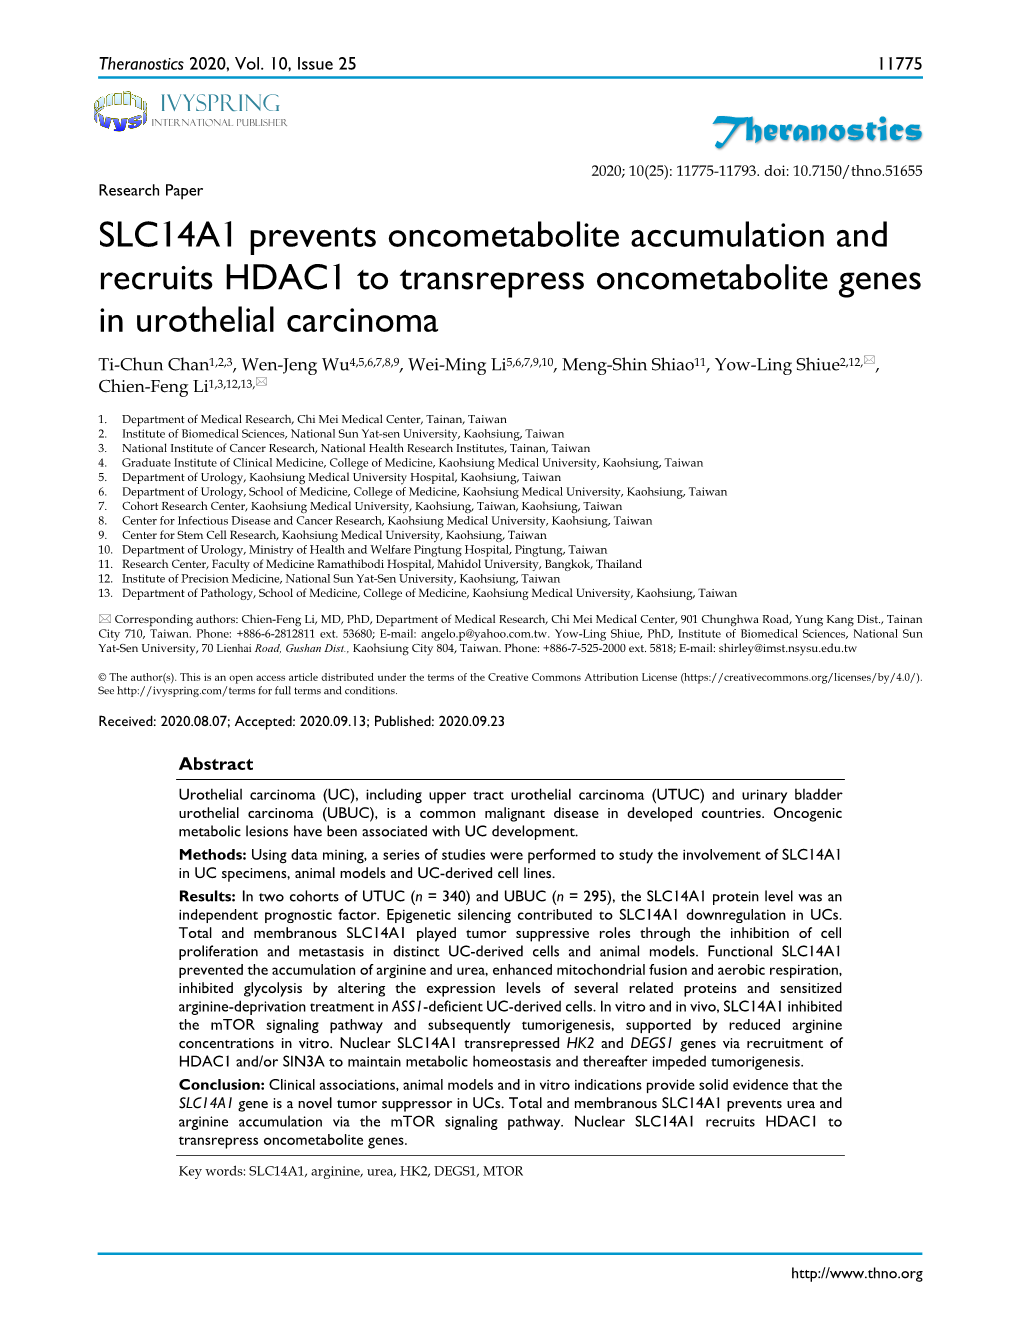 Theranostics SLC14A1 Prevents Oncometabolite Accumulation And